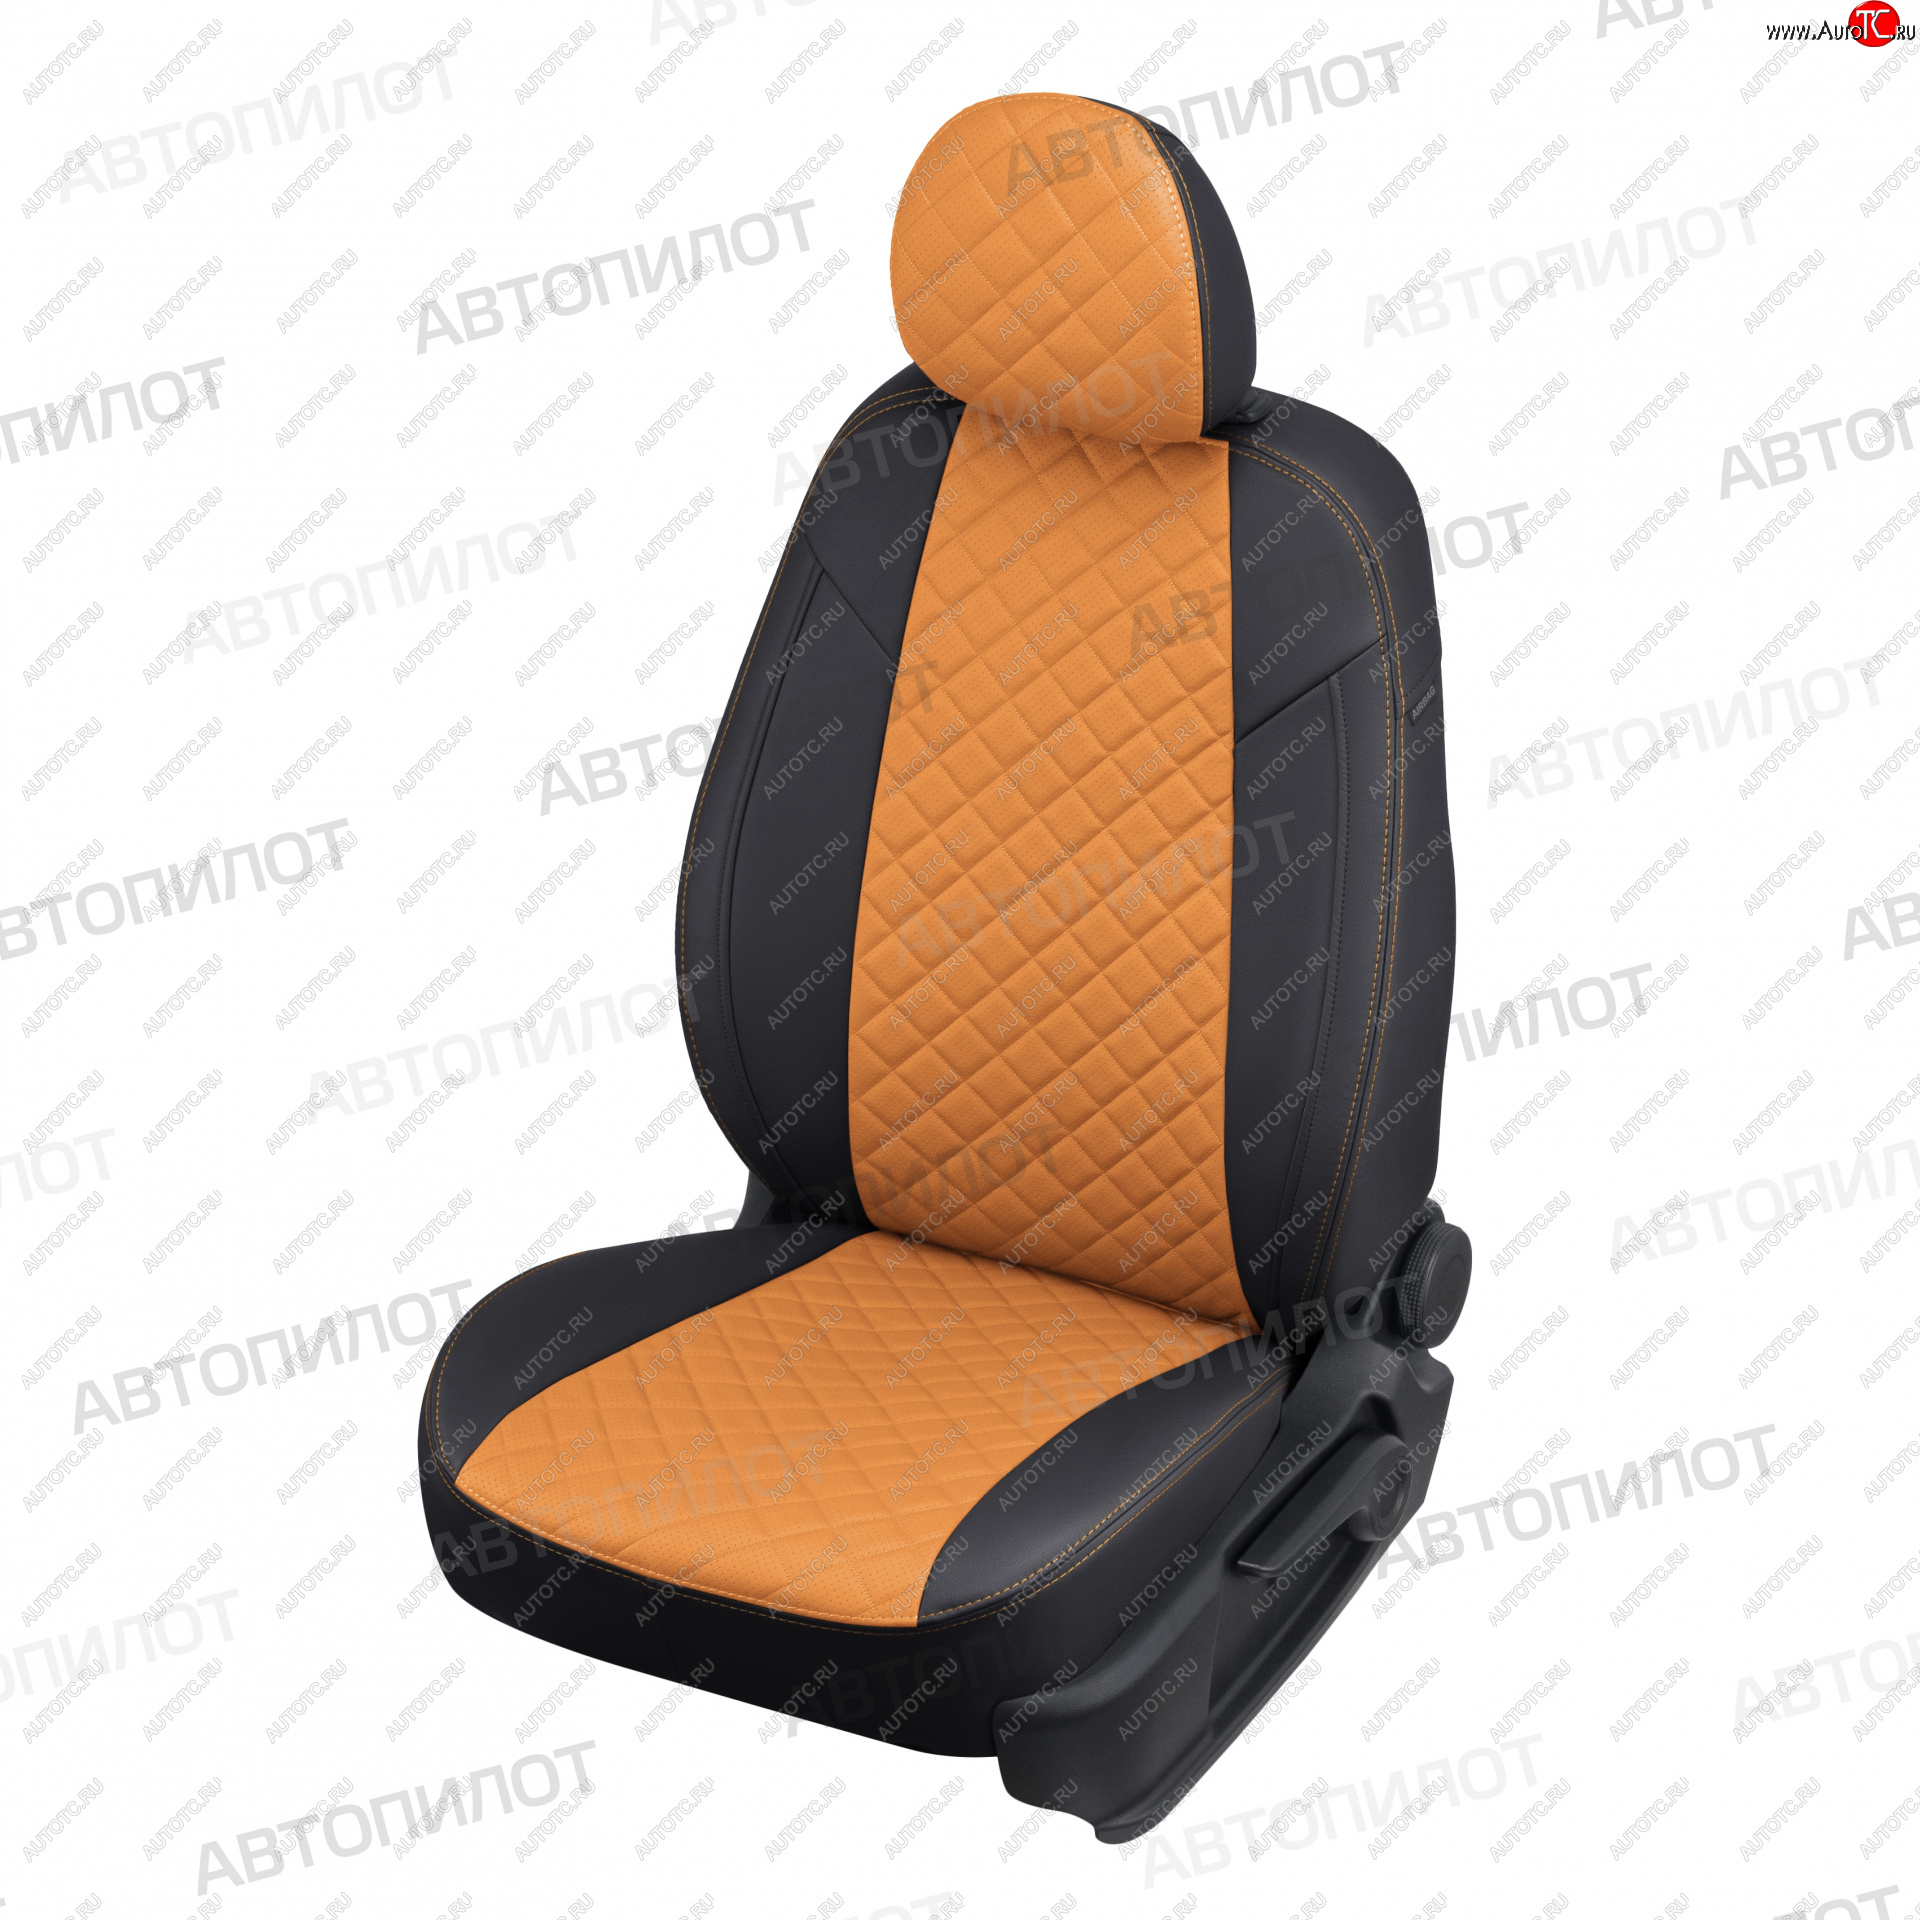 14 499 р. Чехлы сидений (5 мест, экокожа) Автопилот Ромб  Ford Galaxy  WGR (1995-2006) (черный/оранж)